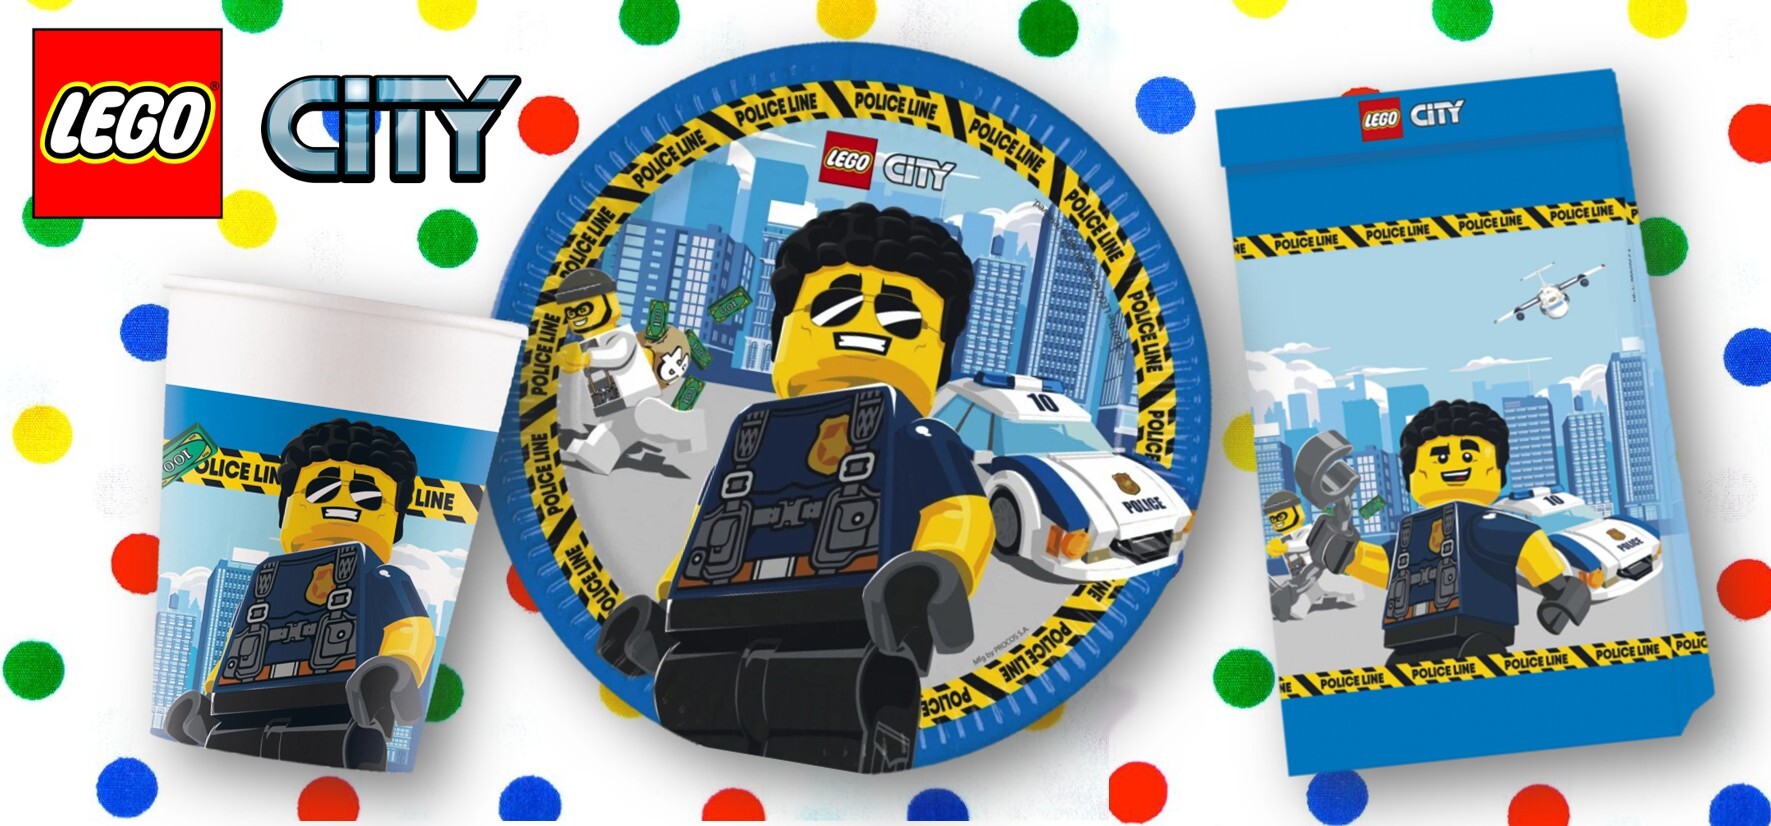 Lego City feestartikelen